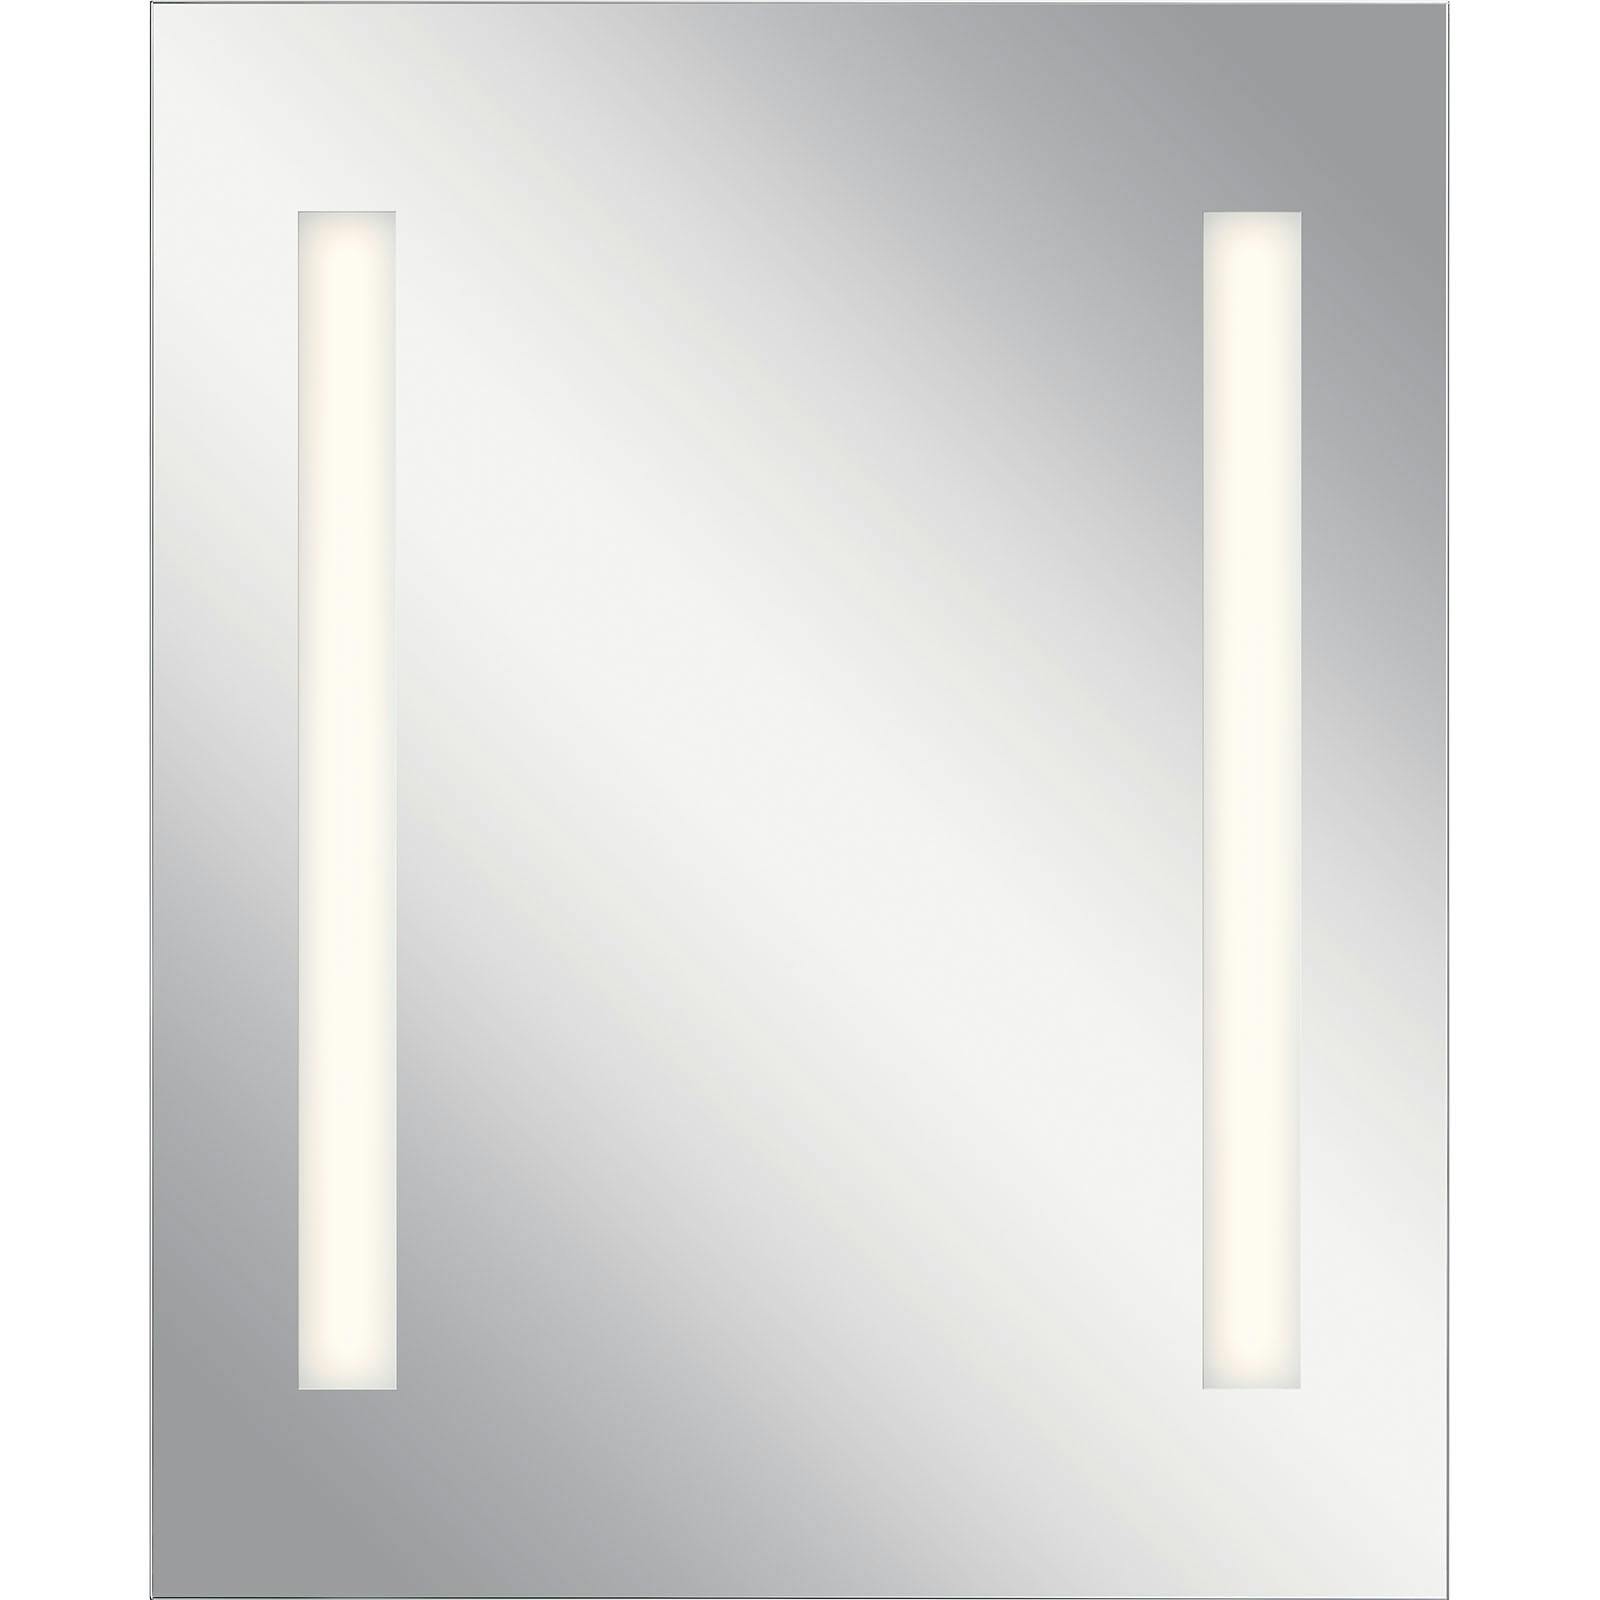 32" x 26" LED Backlit Mirror w/ Soundbar hung vertically on a white background